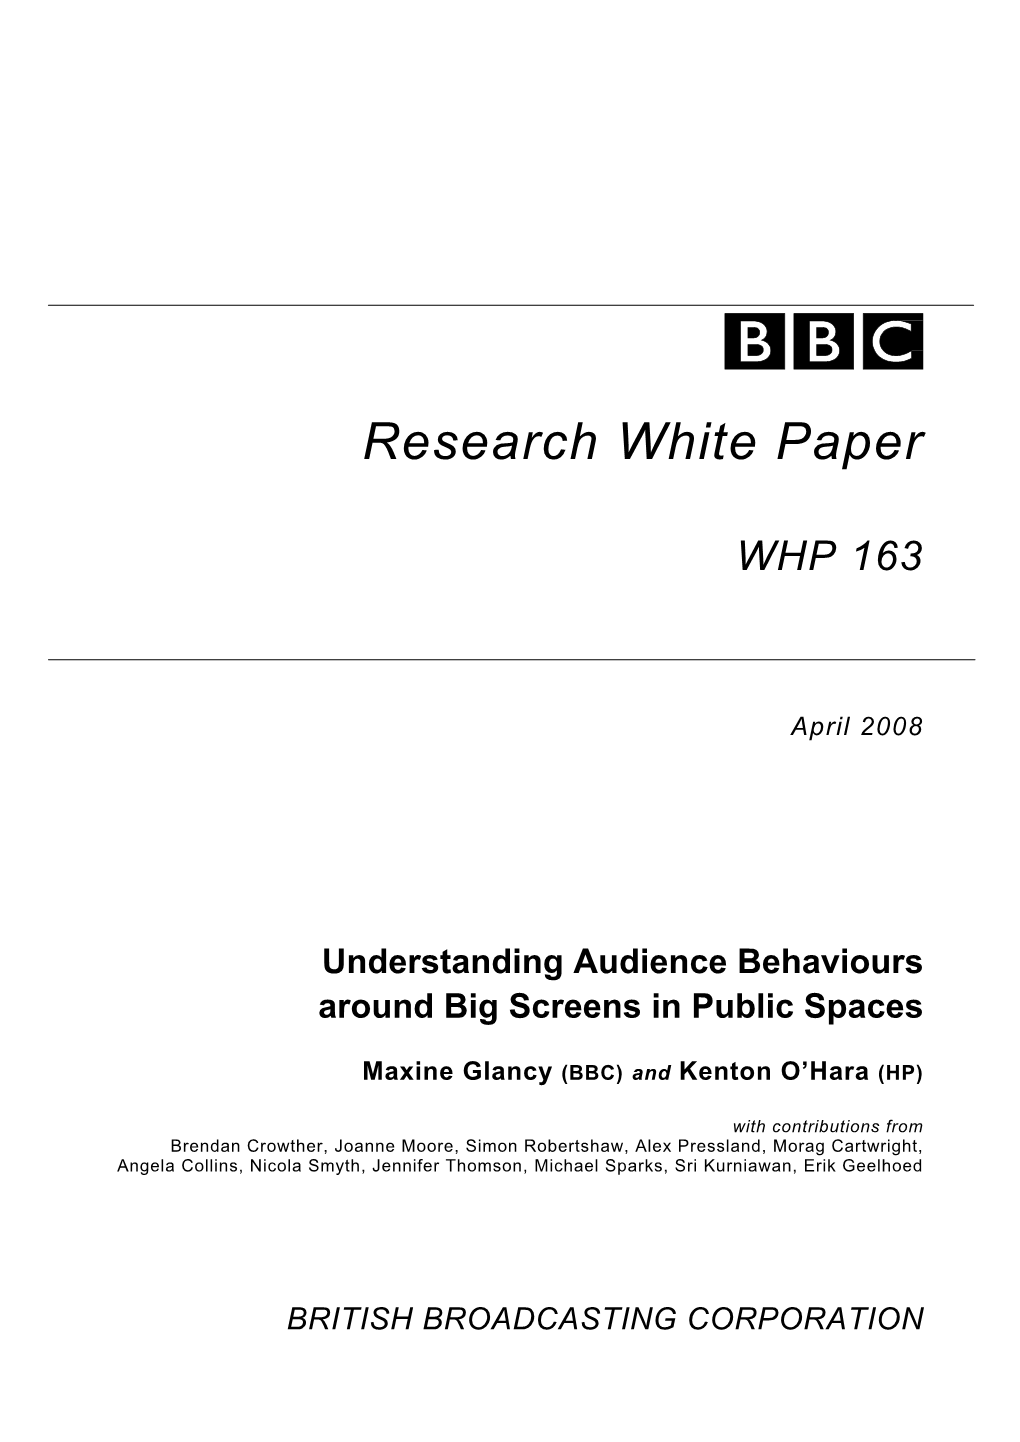 BBC Research White Paper WHP163